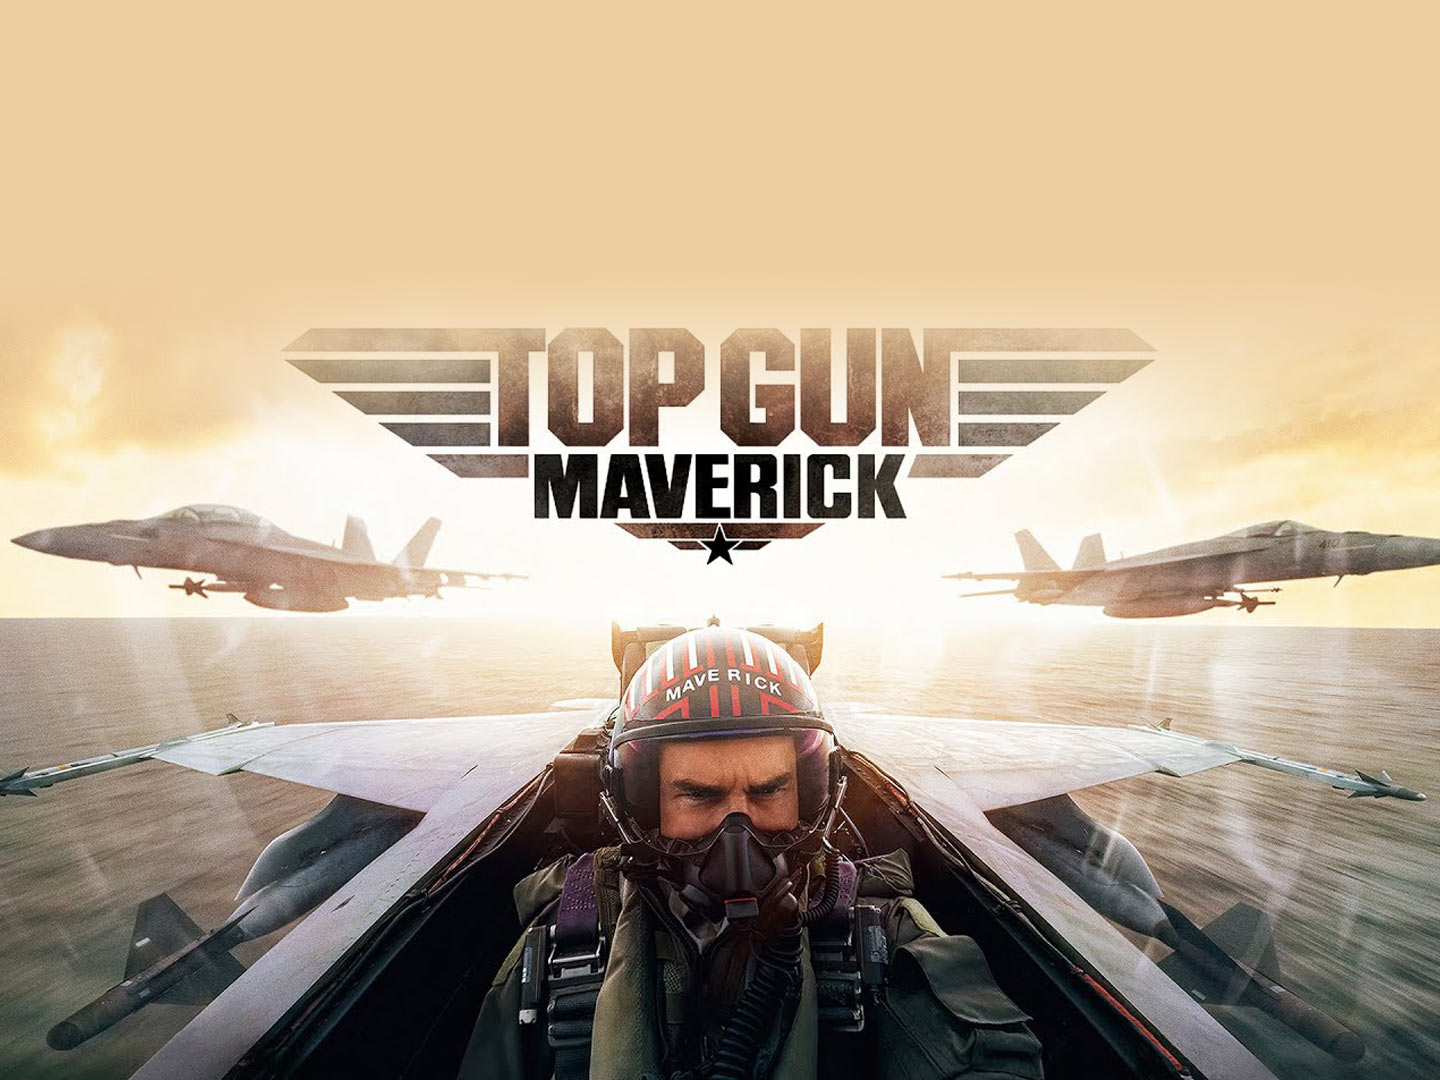 Sunday Cinema Presents - Top Gun: Maverick